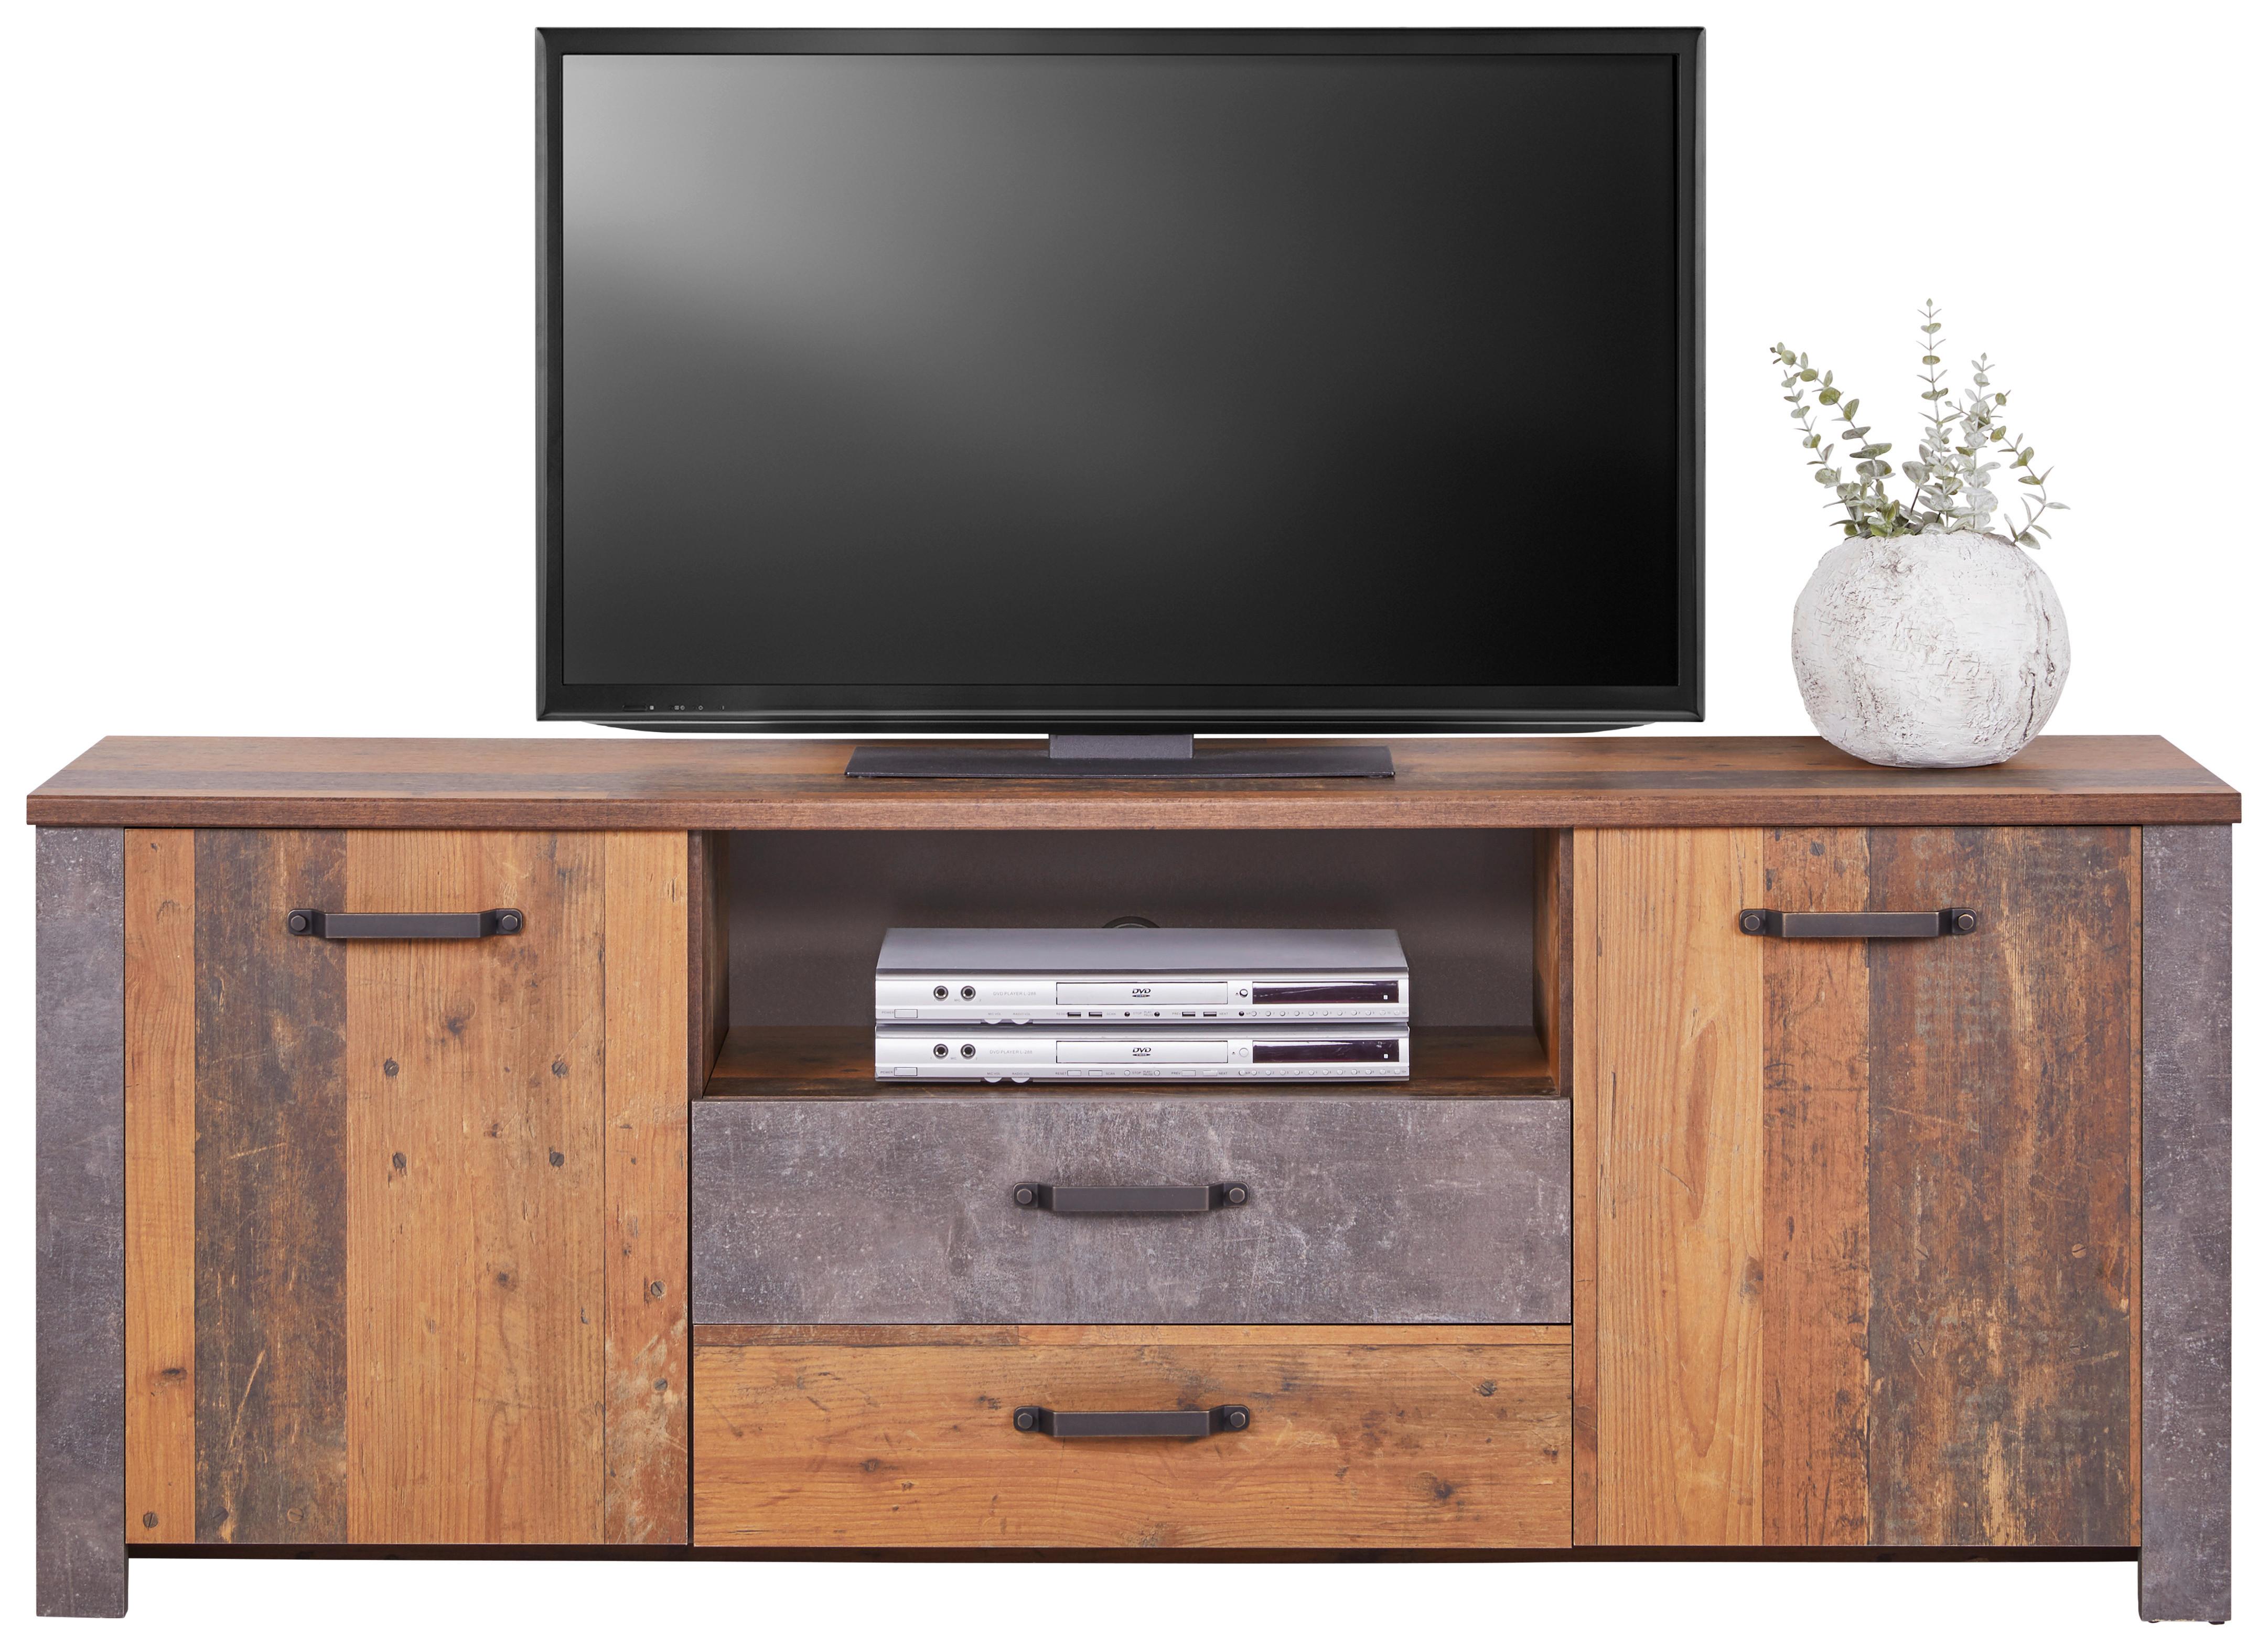 Komoda Pod Televizi Ontario - barvy dubu/černá, Trend, kompozitní dřevo/plast (176/67,7/41,5cm) - Ondega